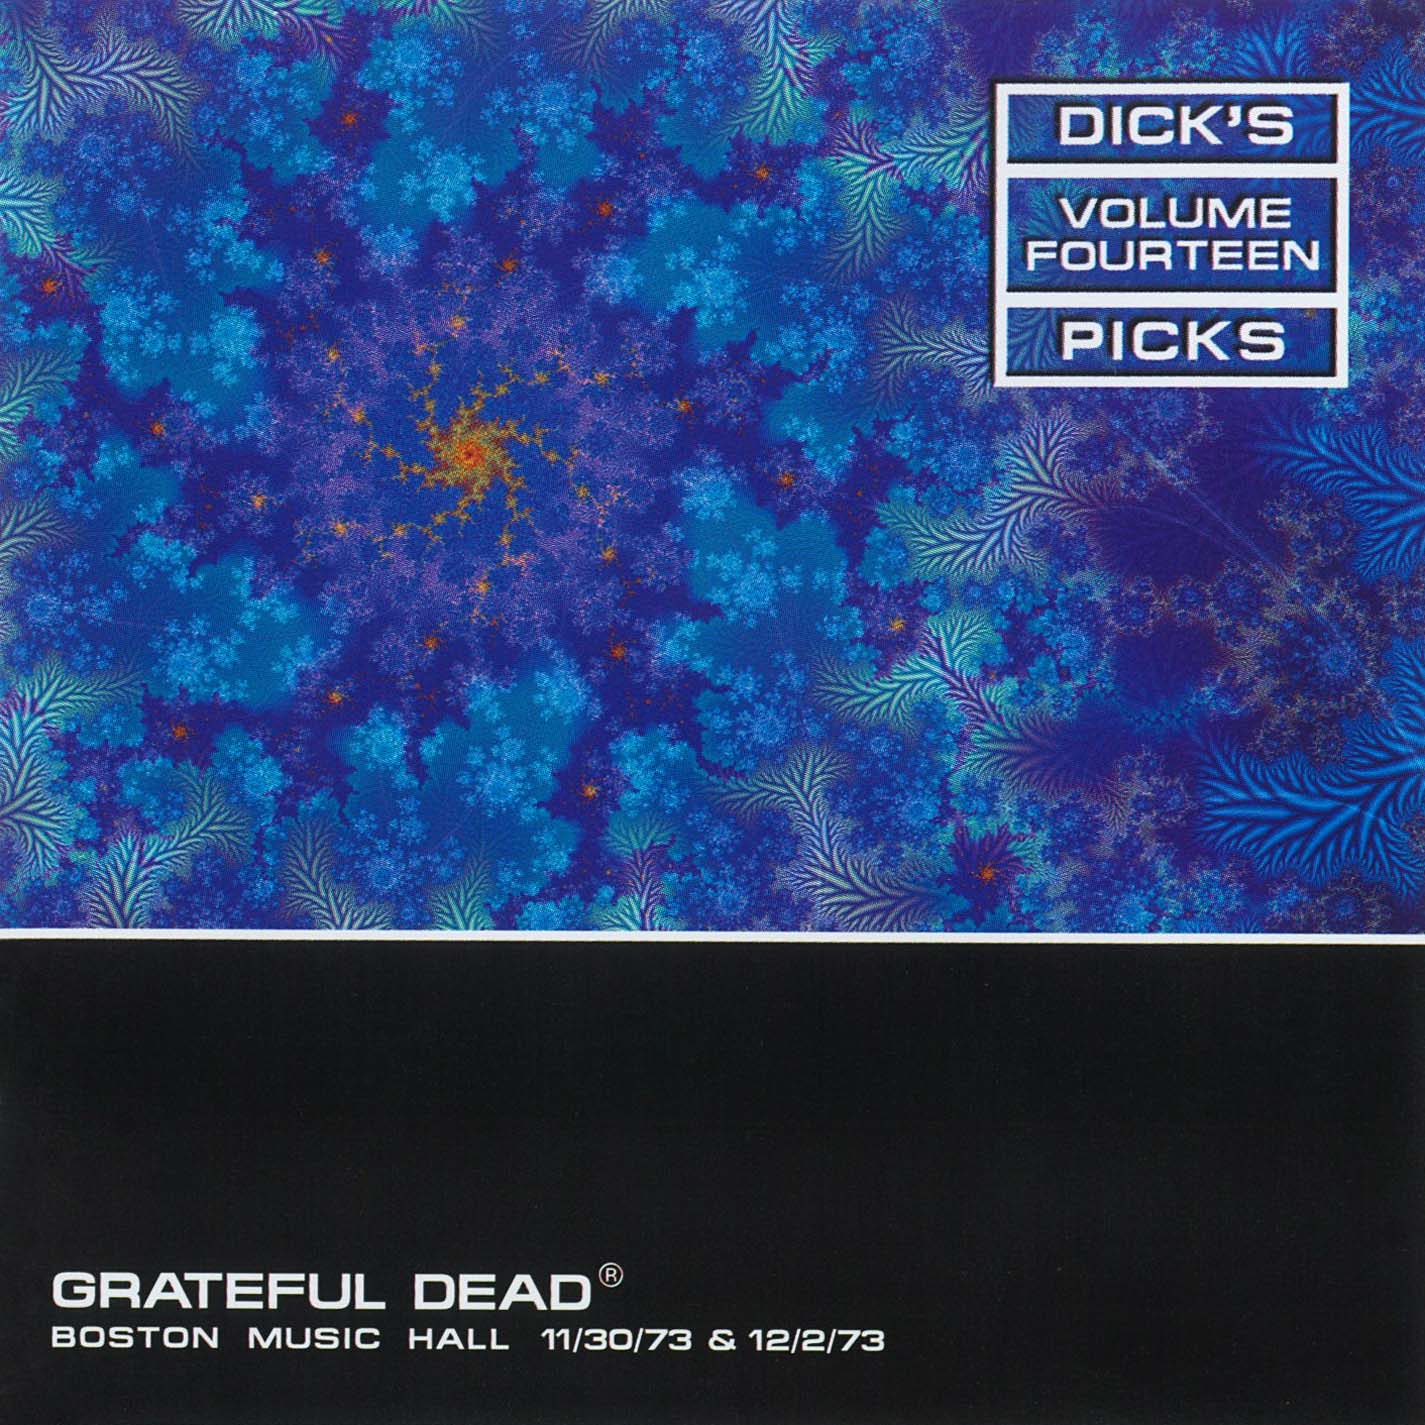 Grateful Dead Dick's Picks 14 album cover artwork